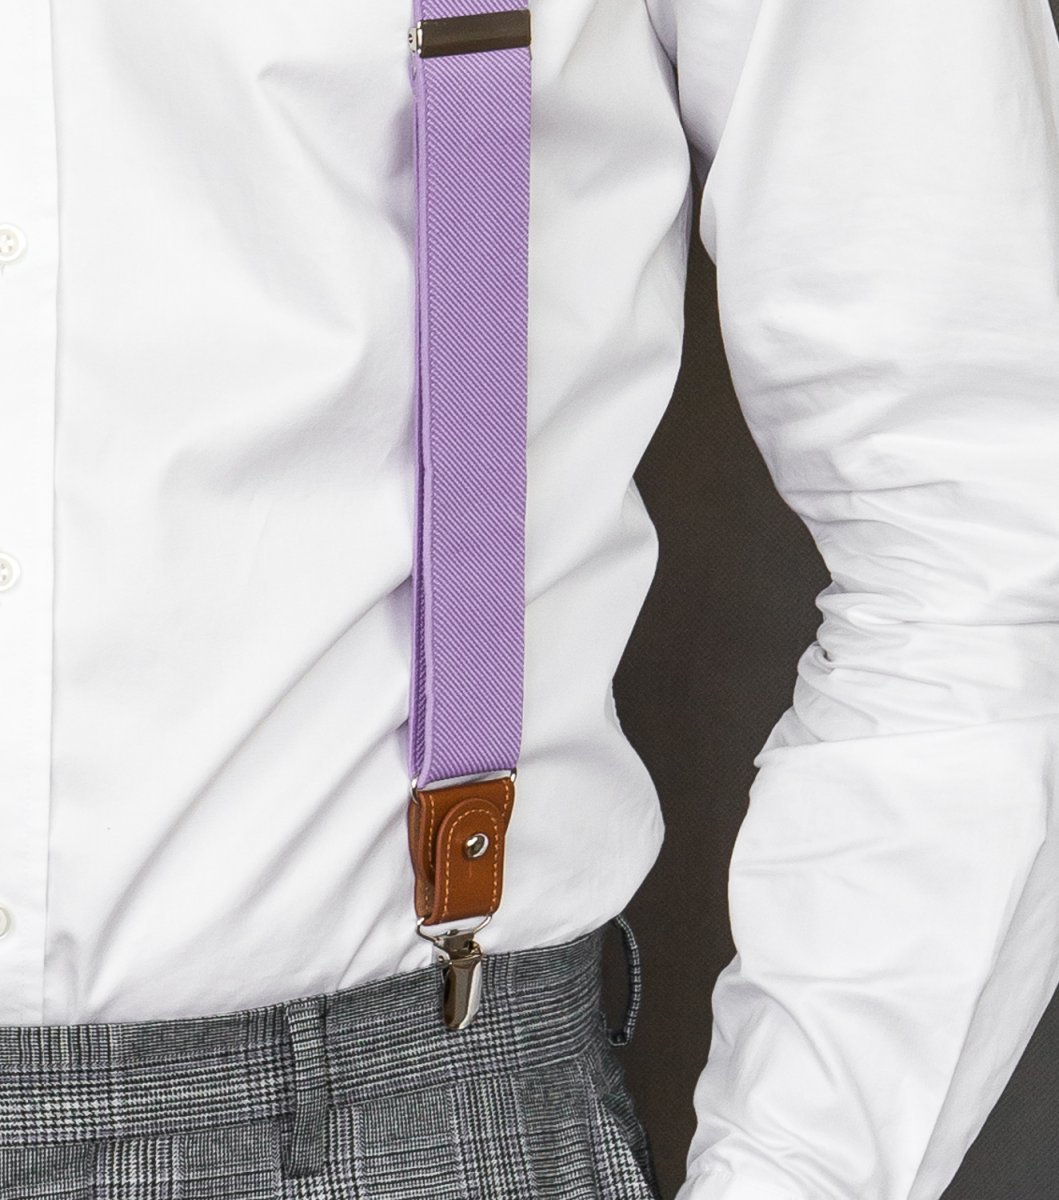 Men's Solid Purple Suspenders Y Shape Back Elastic Button & 